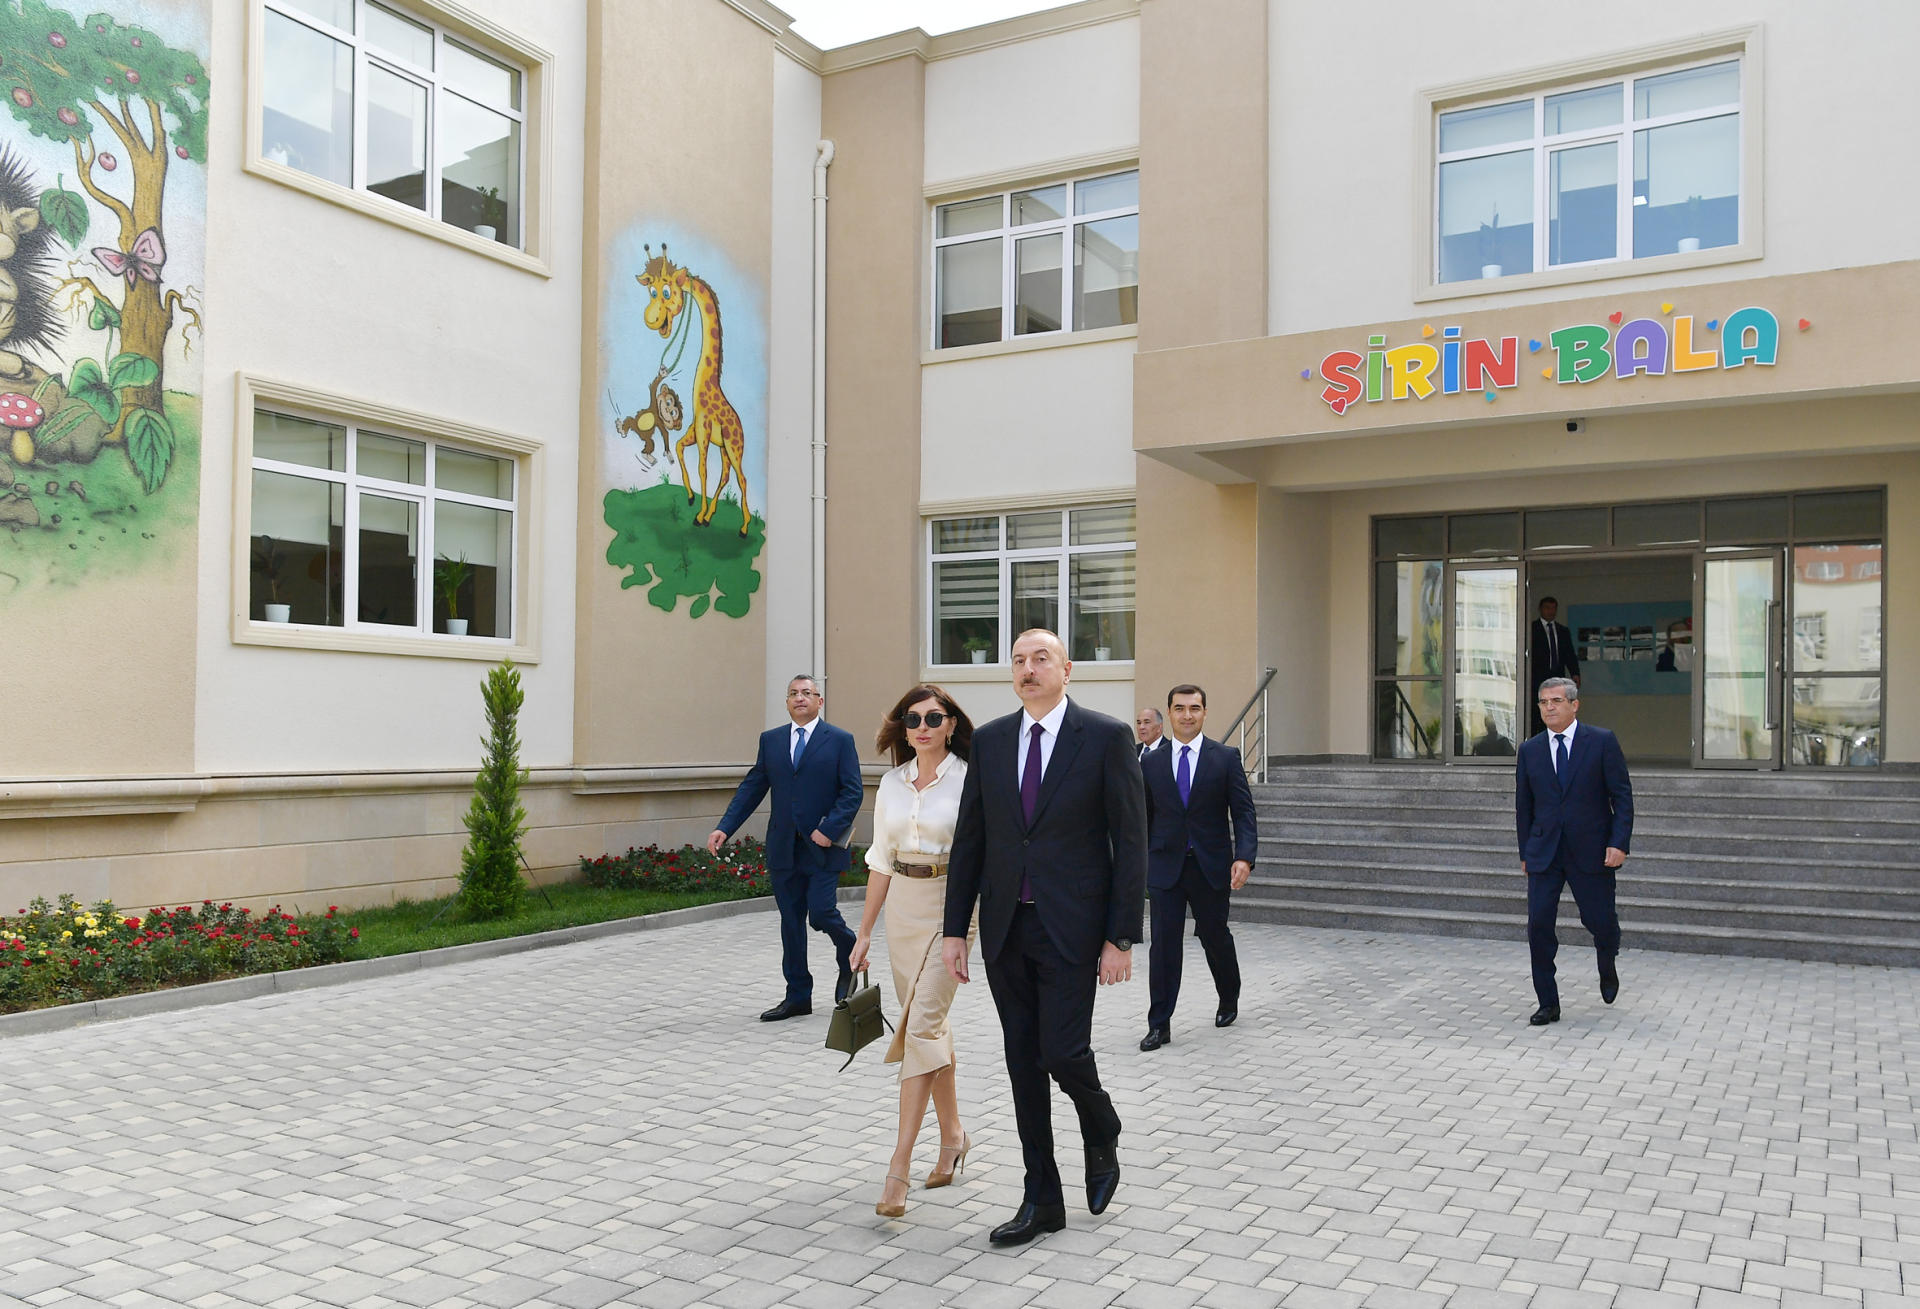 Azerbaijani president, first lady inaugurate Gobu Park-2 residential complex (PHOTO)